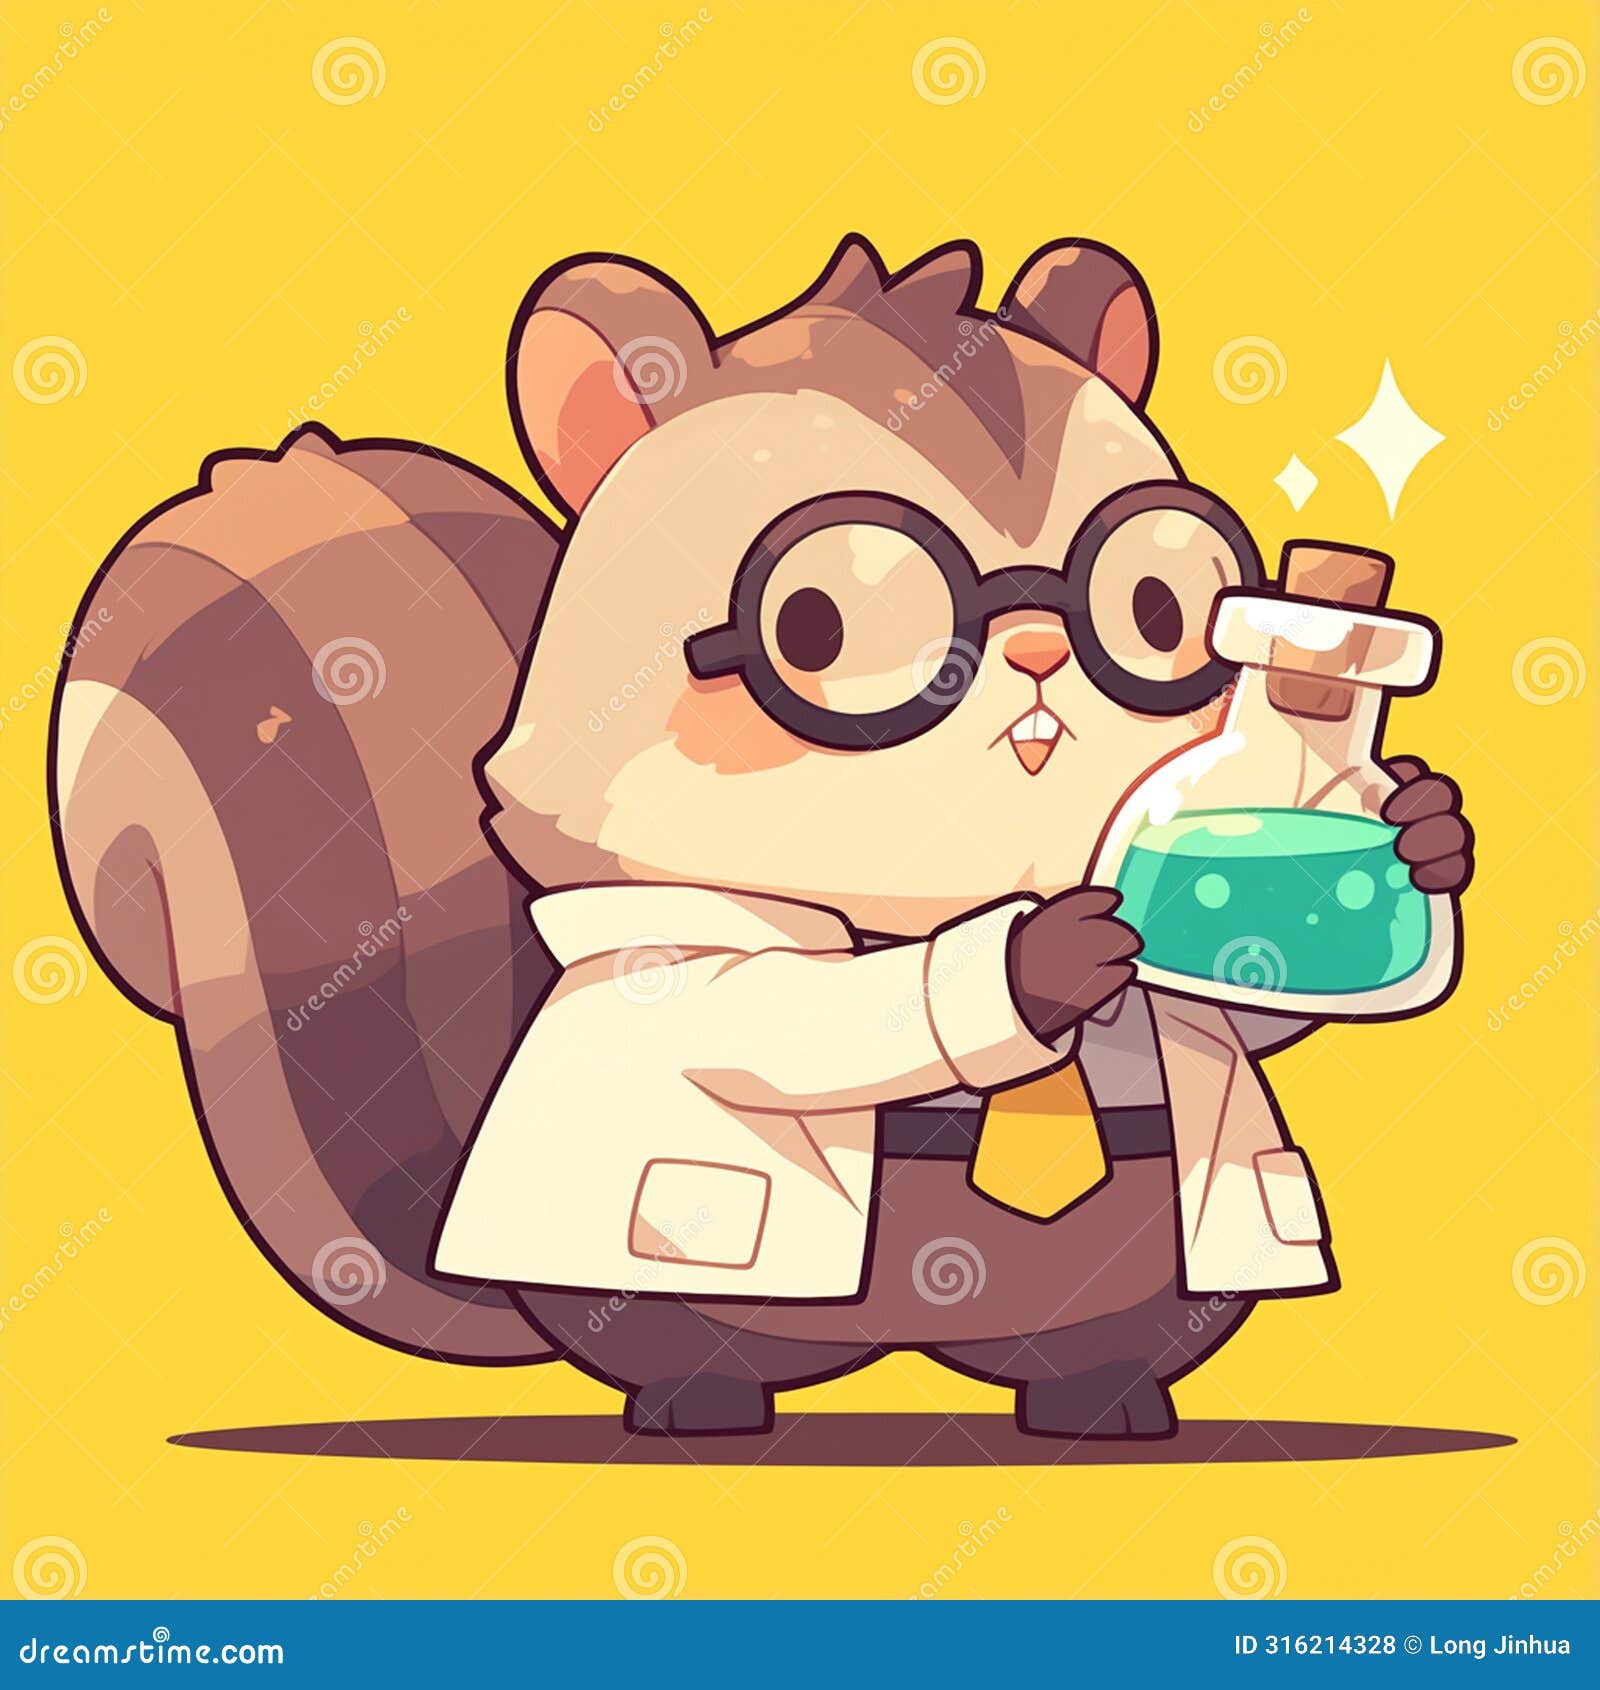 a nimble squirrel scientist cartoon style